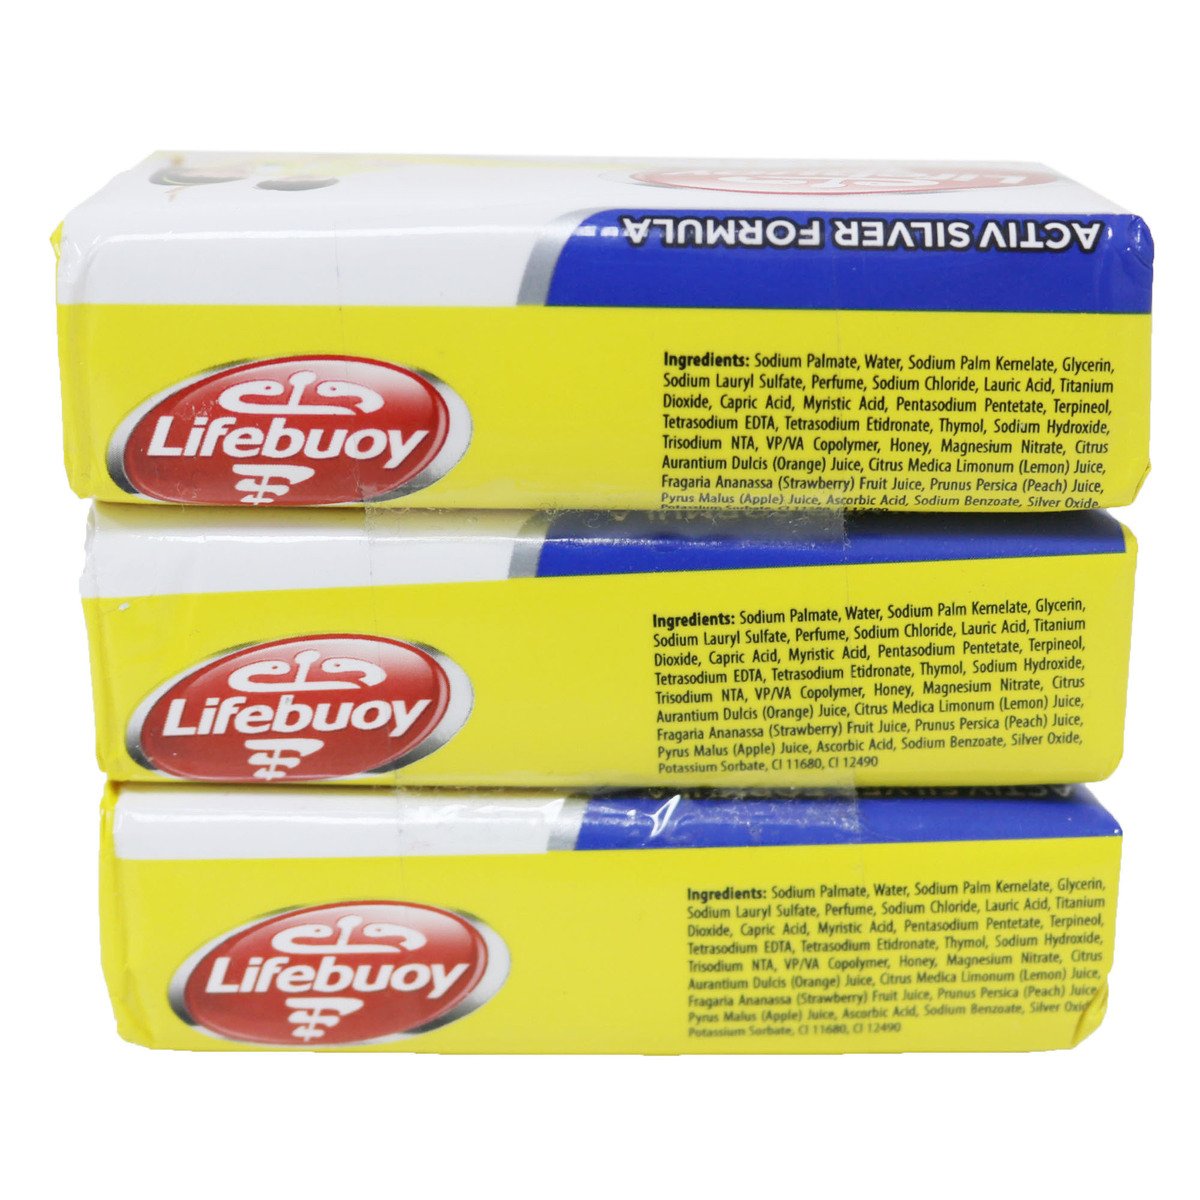 Lifebouy Antibacterial Bath Soap Lemon Fresh 3 x 80g